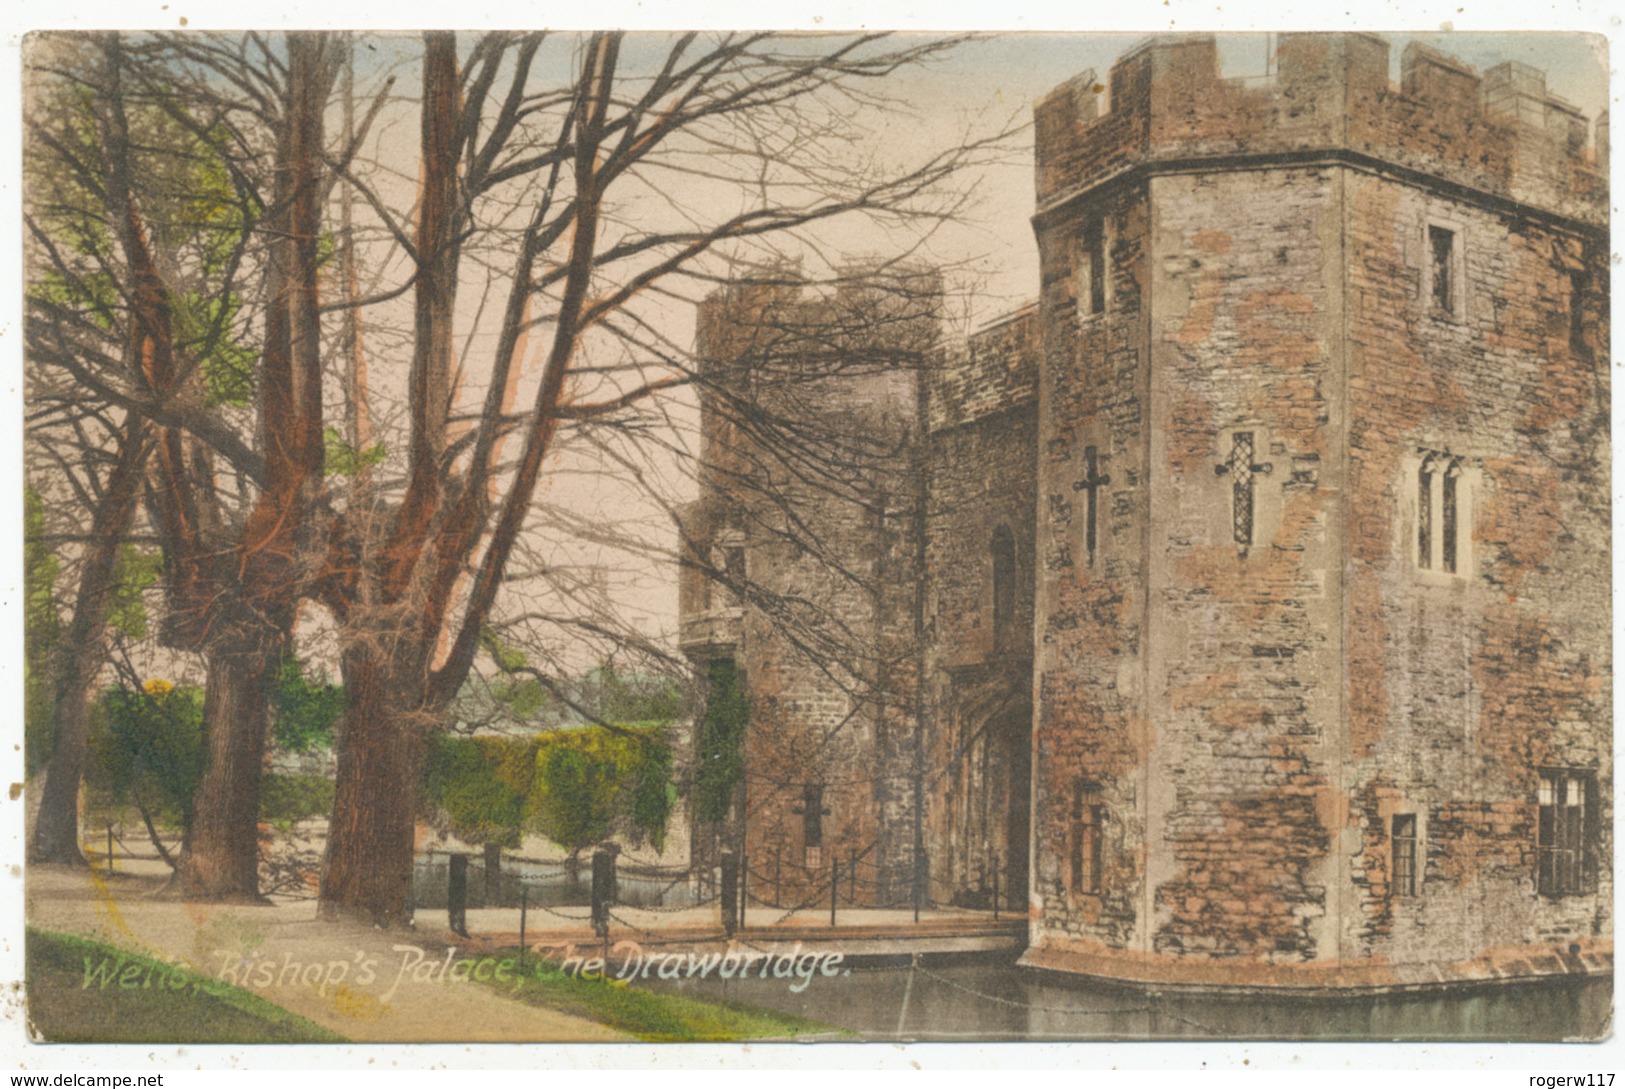 Wells, Bishop's Palace, The Drawbridge - Wells